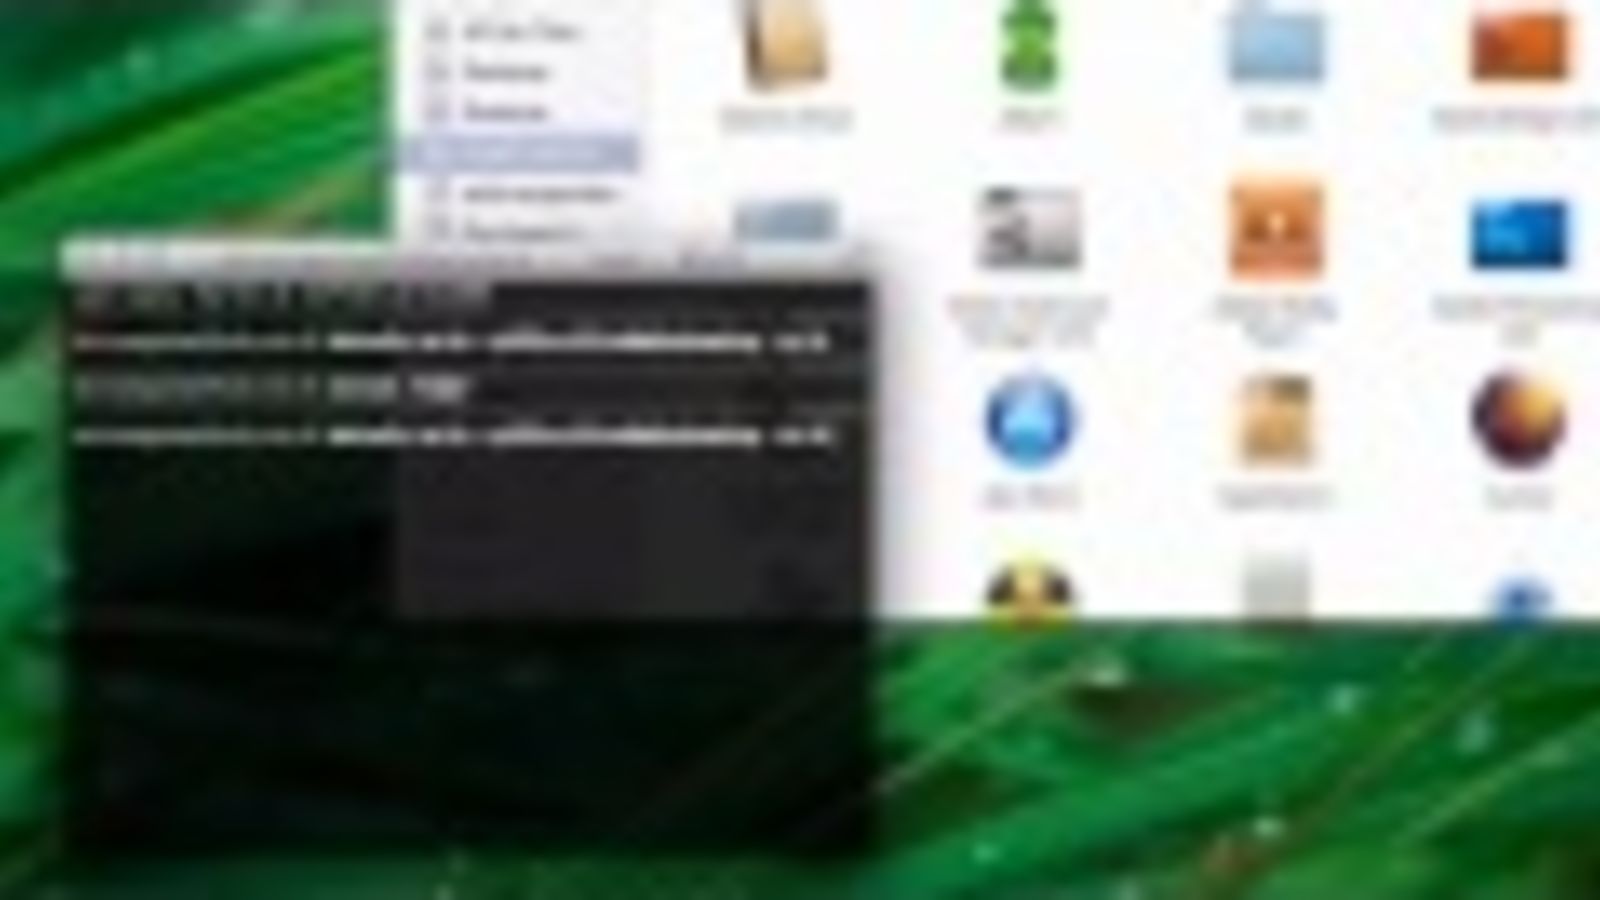 install windows 7 on macbook pro 2007